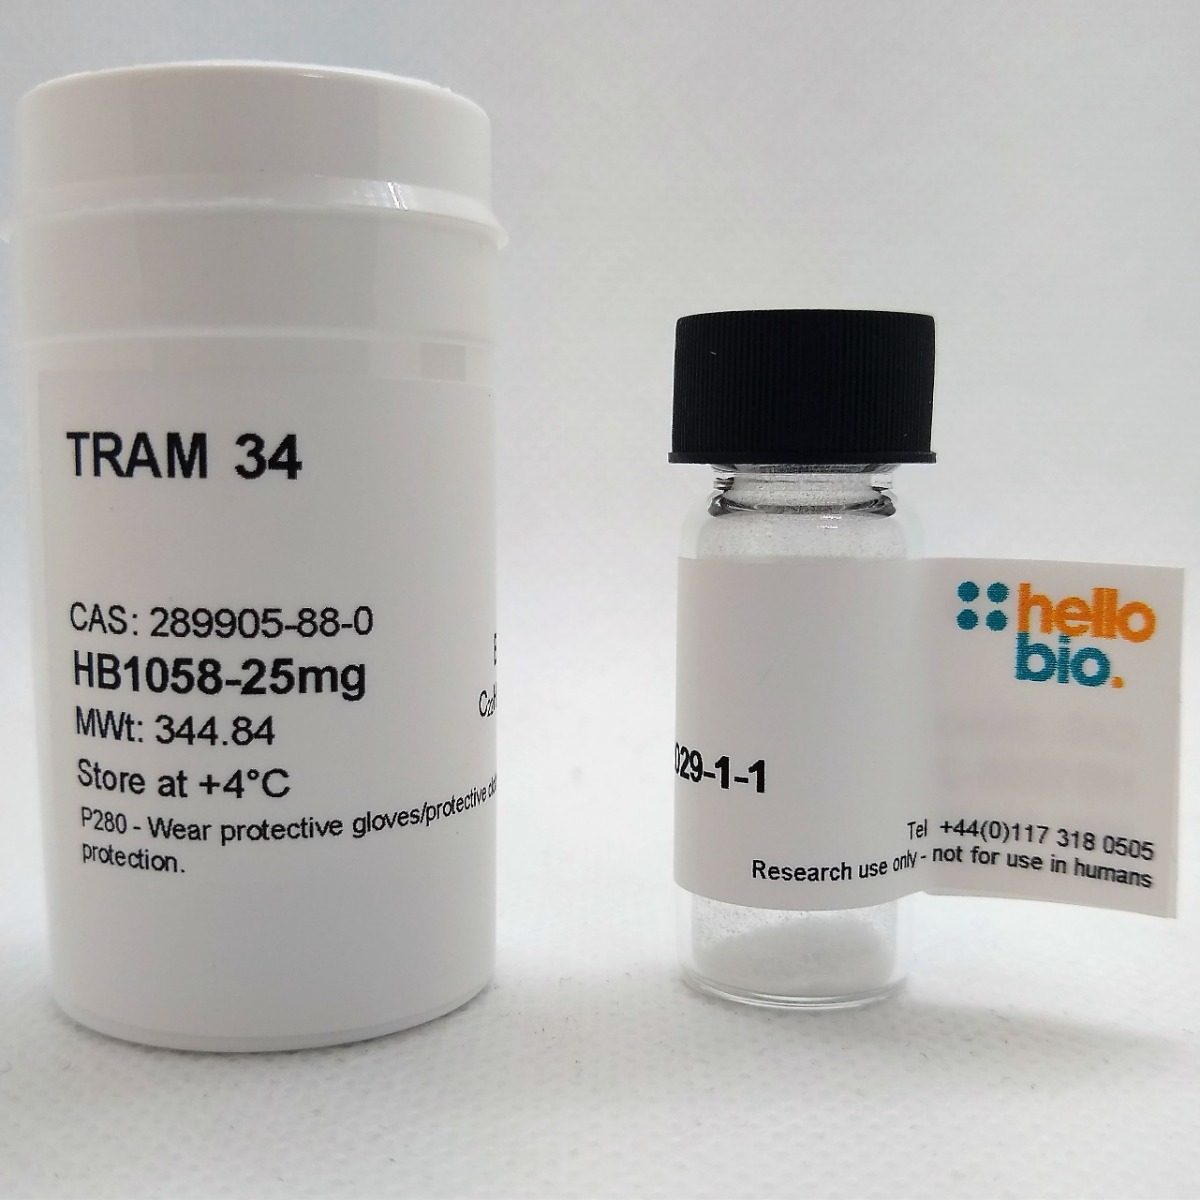 TRAM 34 product vial image | Hello Bio